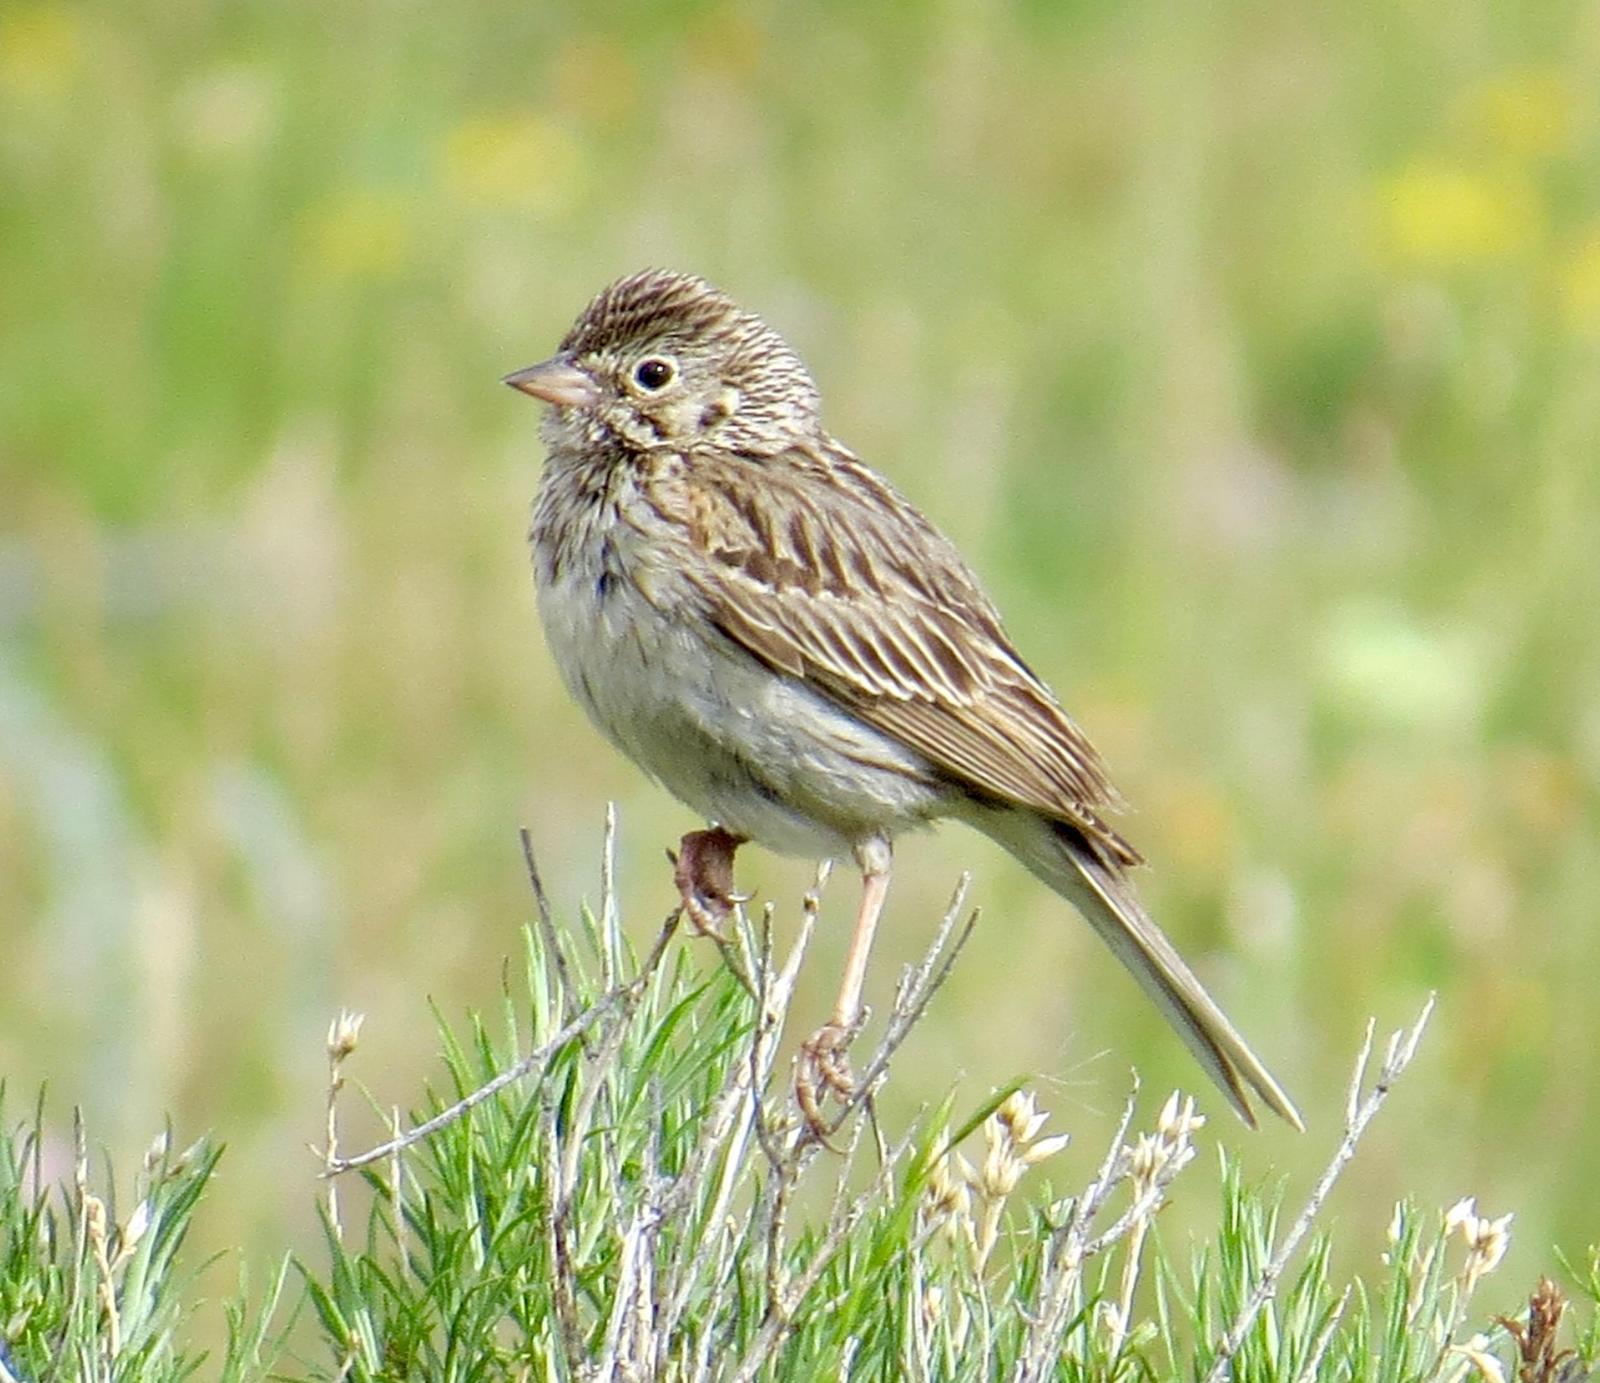 Vesper Sparrow Photo by Don Glasco